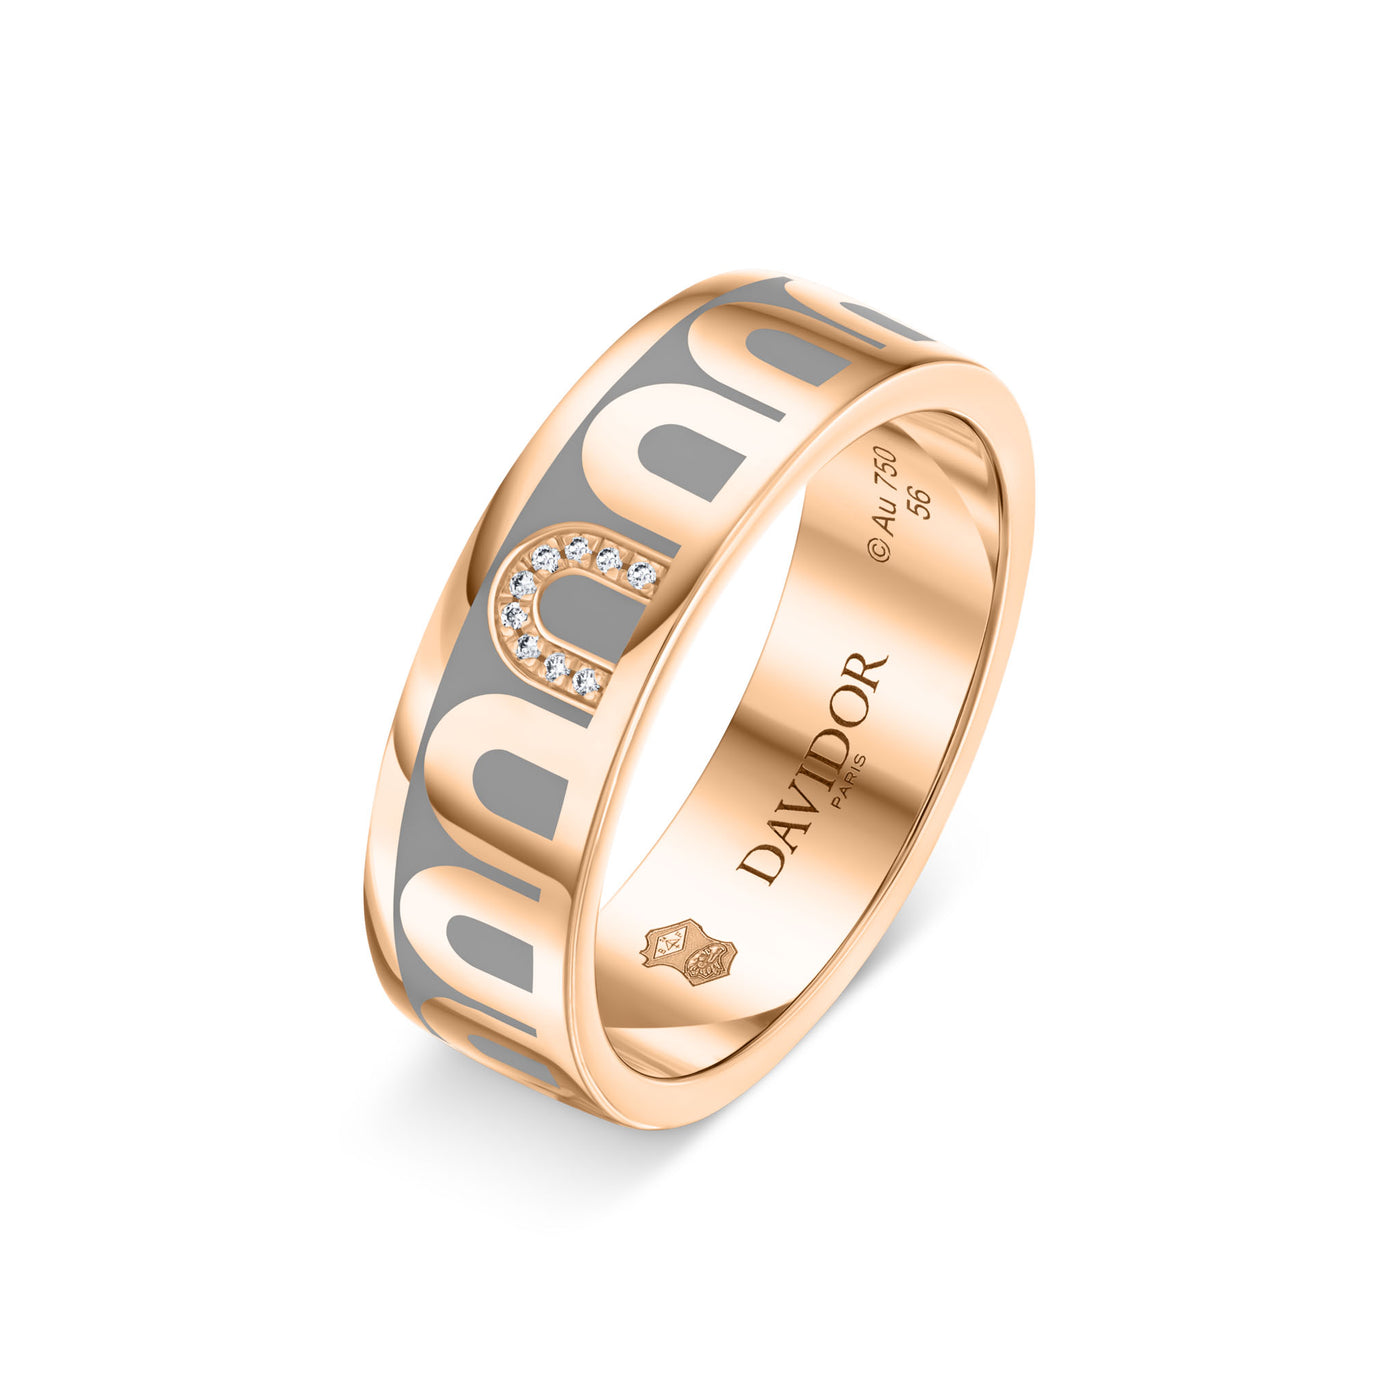 L’Arc de DAVIDOR Ring MM, 18k Rose Gold with Anthracite Lacquered Ceramic and Porta Simple Diamonds - DAVIDOR